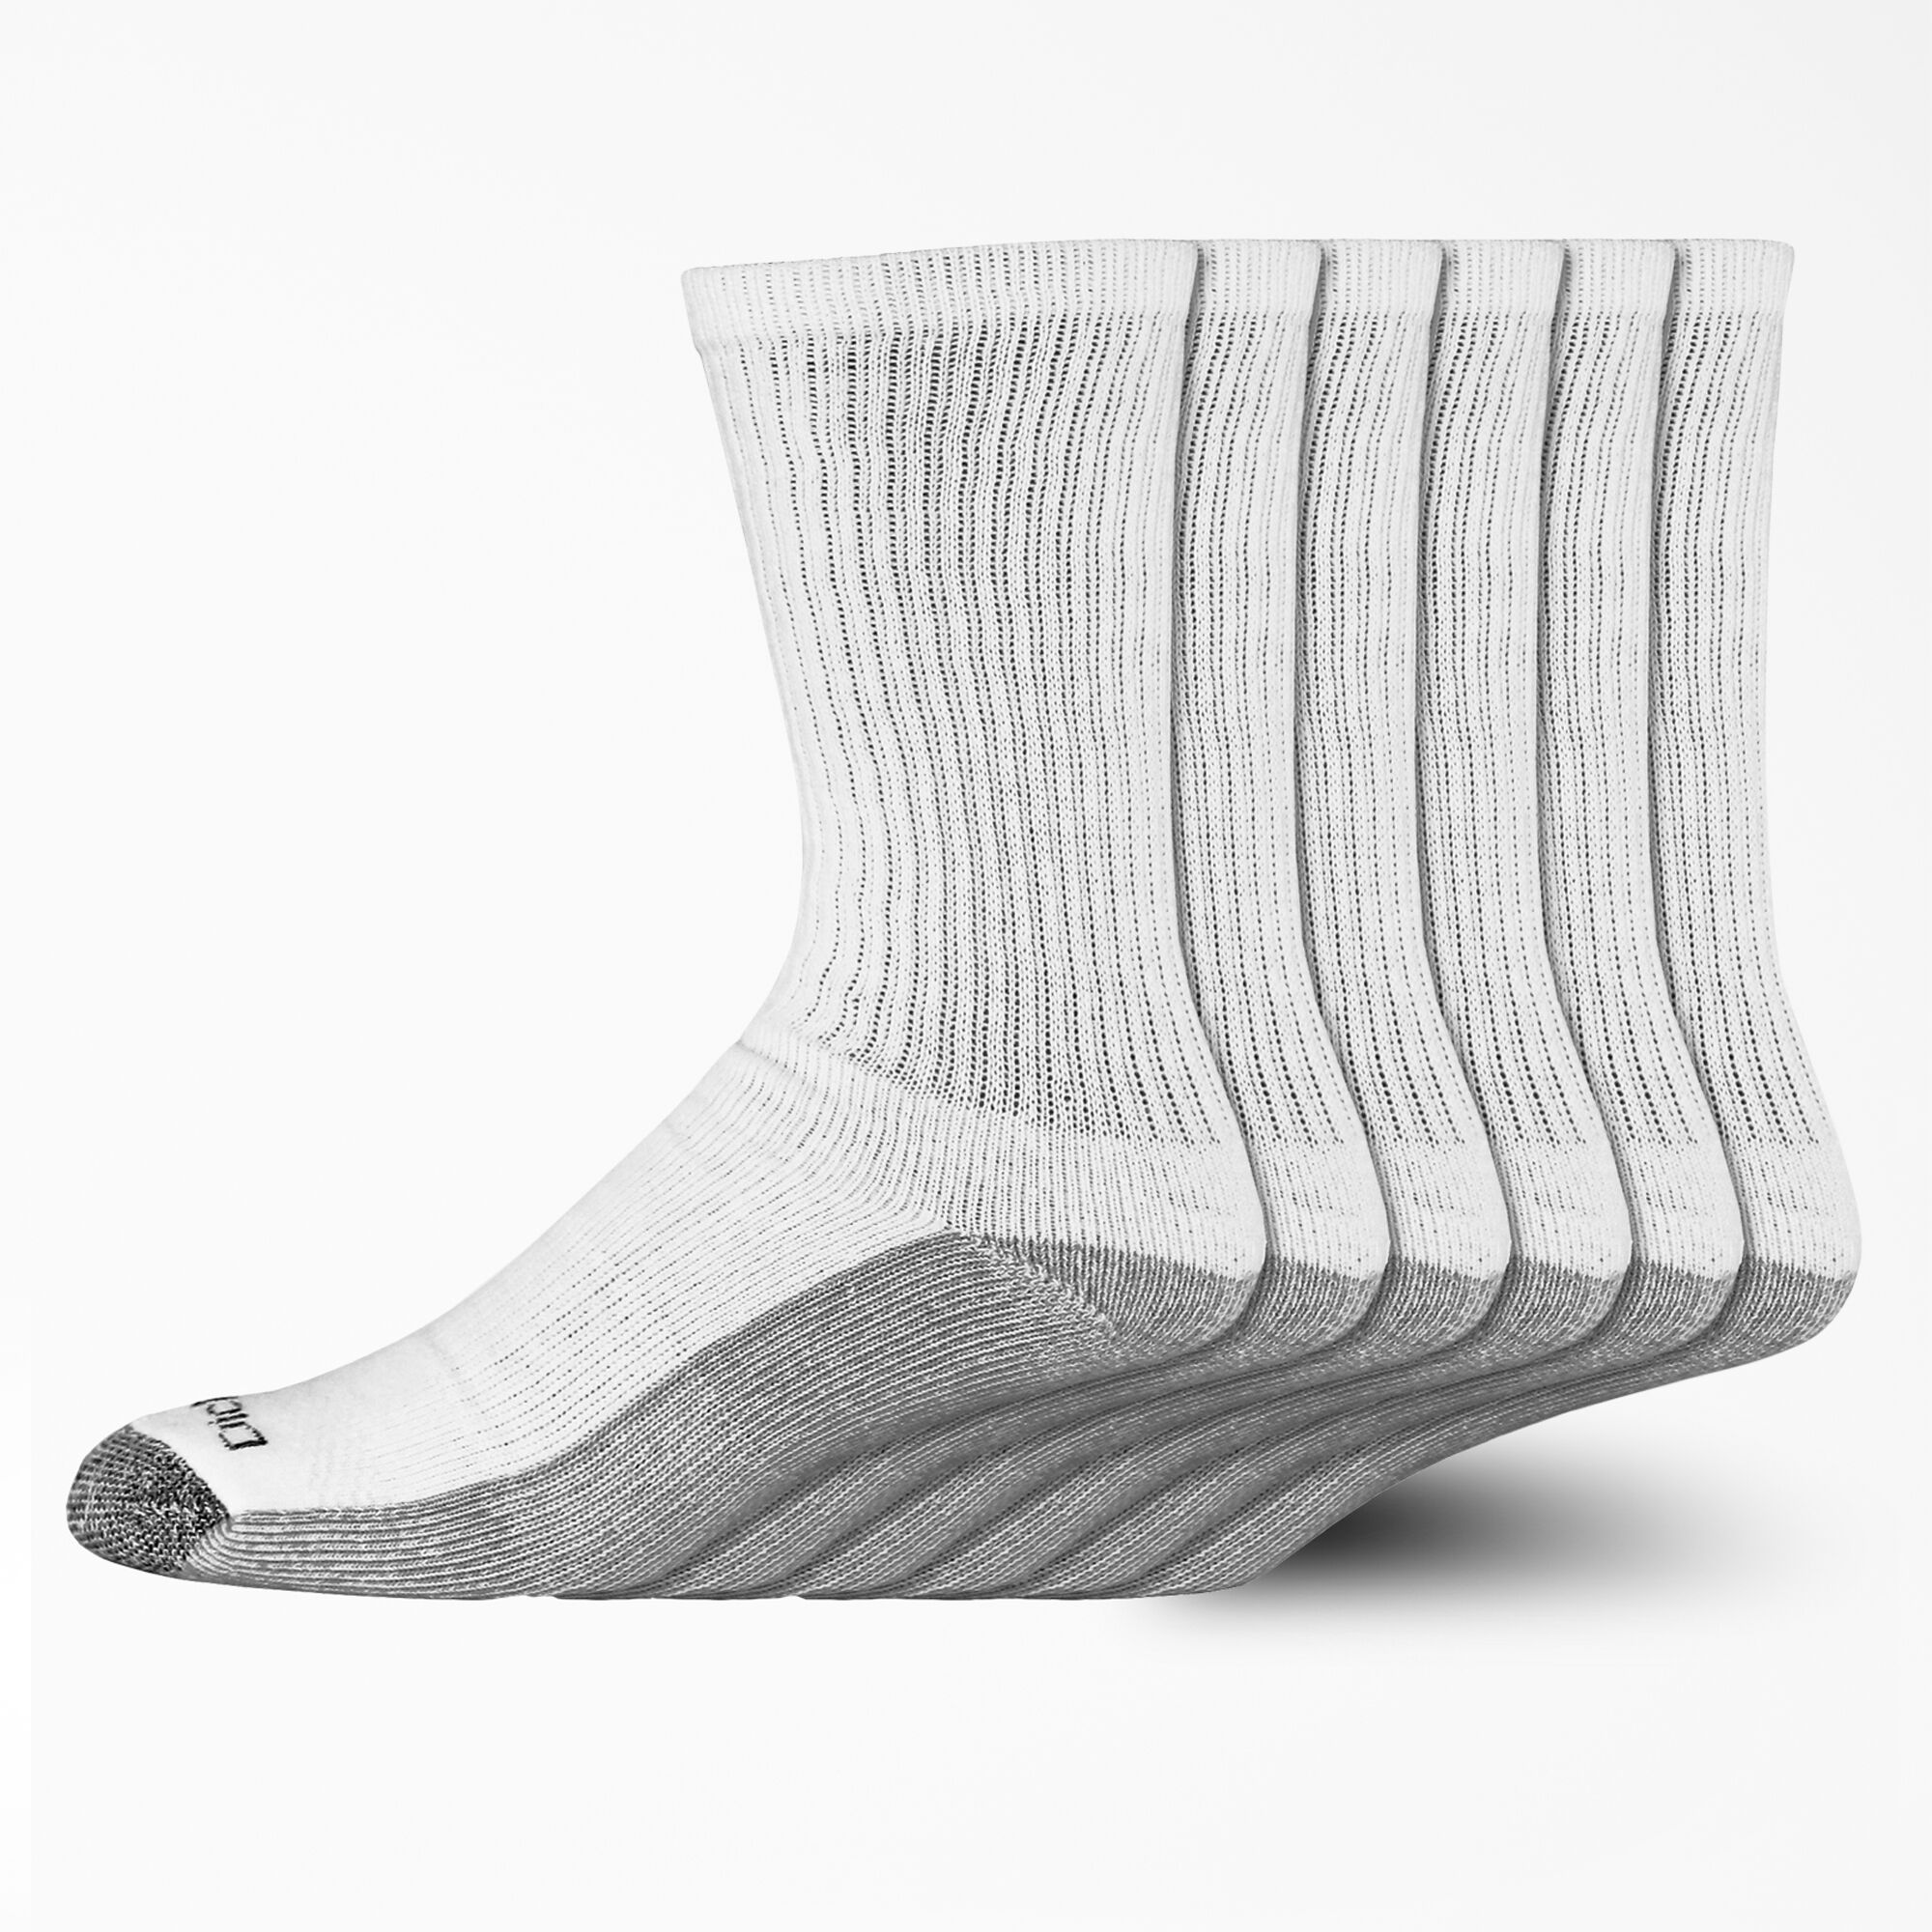 Work Socks and Crew Socks for Men & Women | Dickies US